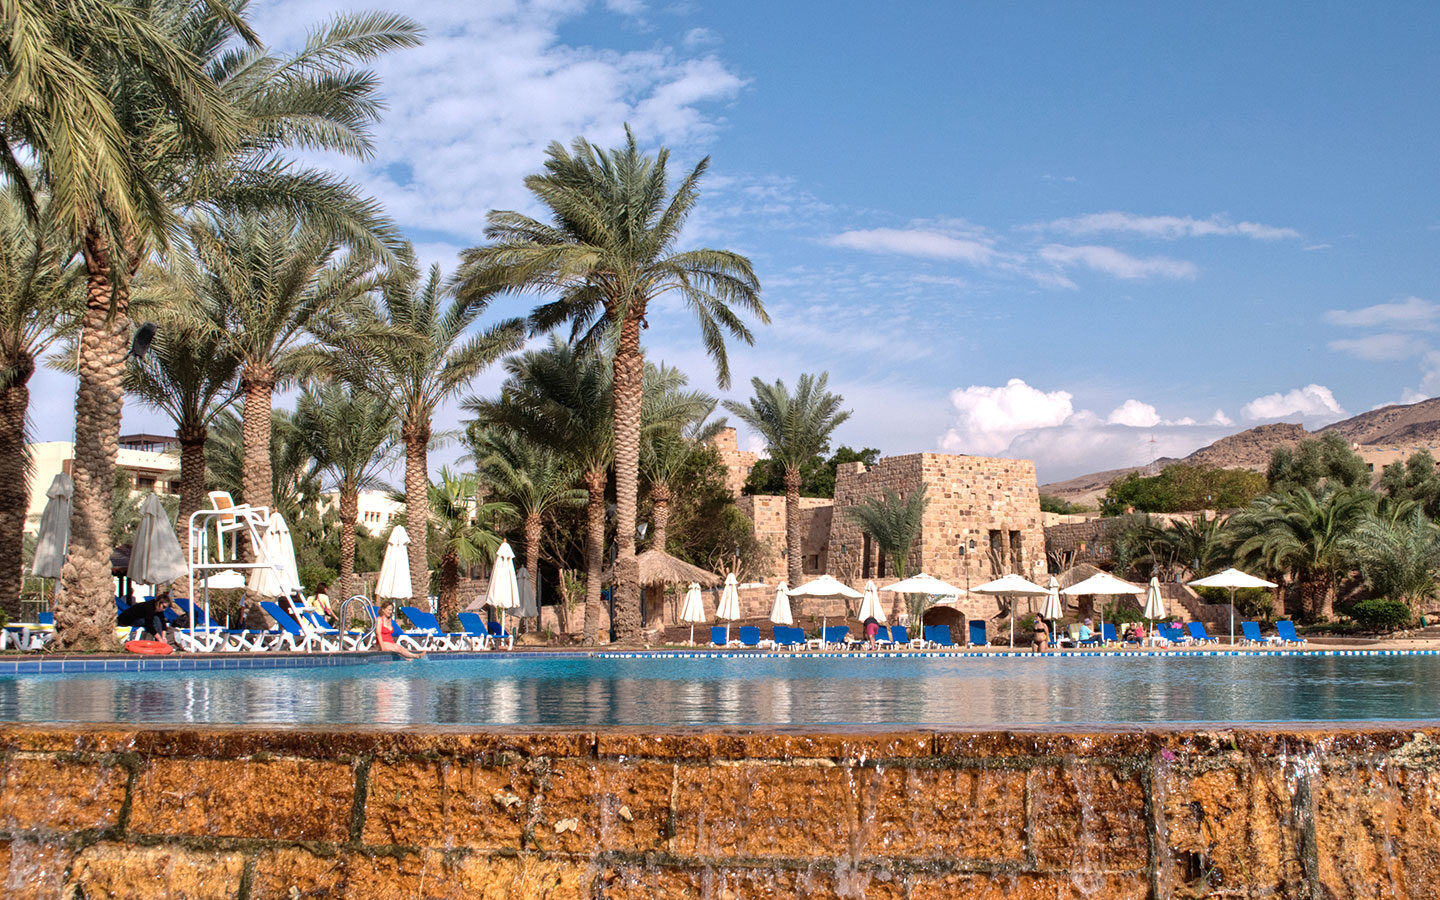 Is Jordan expensive? Swimming pool at the Dead Sea Mövenpick